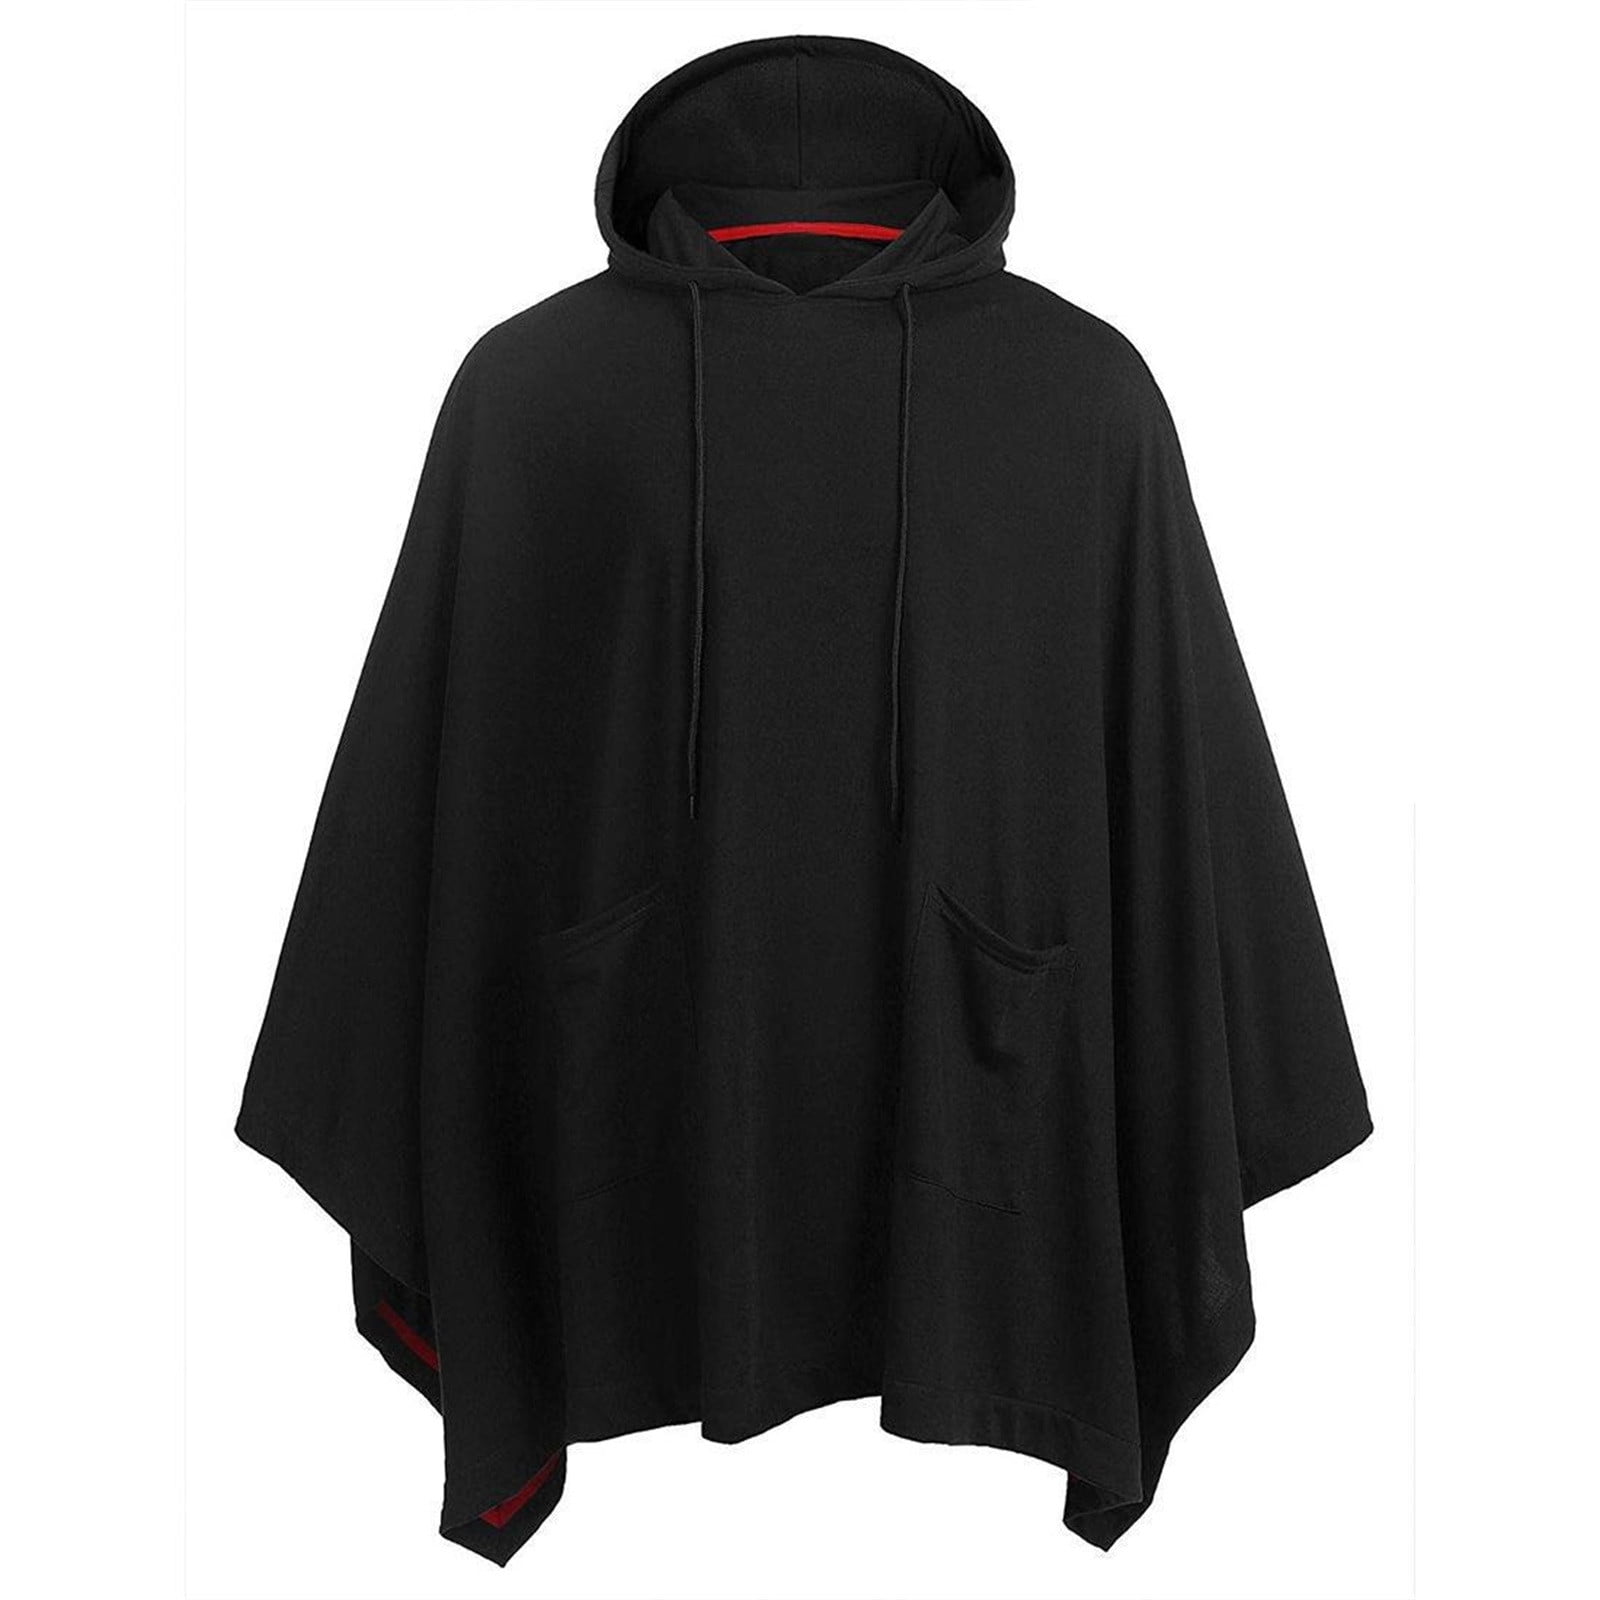 ZRBYWB Sweatshirts For Men Men Casual Hooded Poncho Cape Cloak Fashion ...